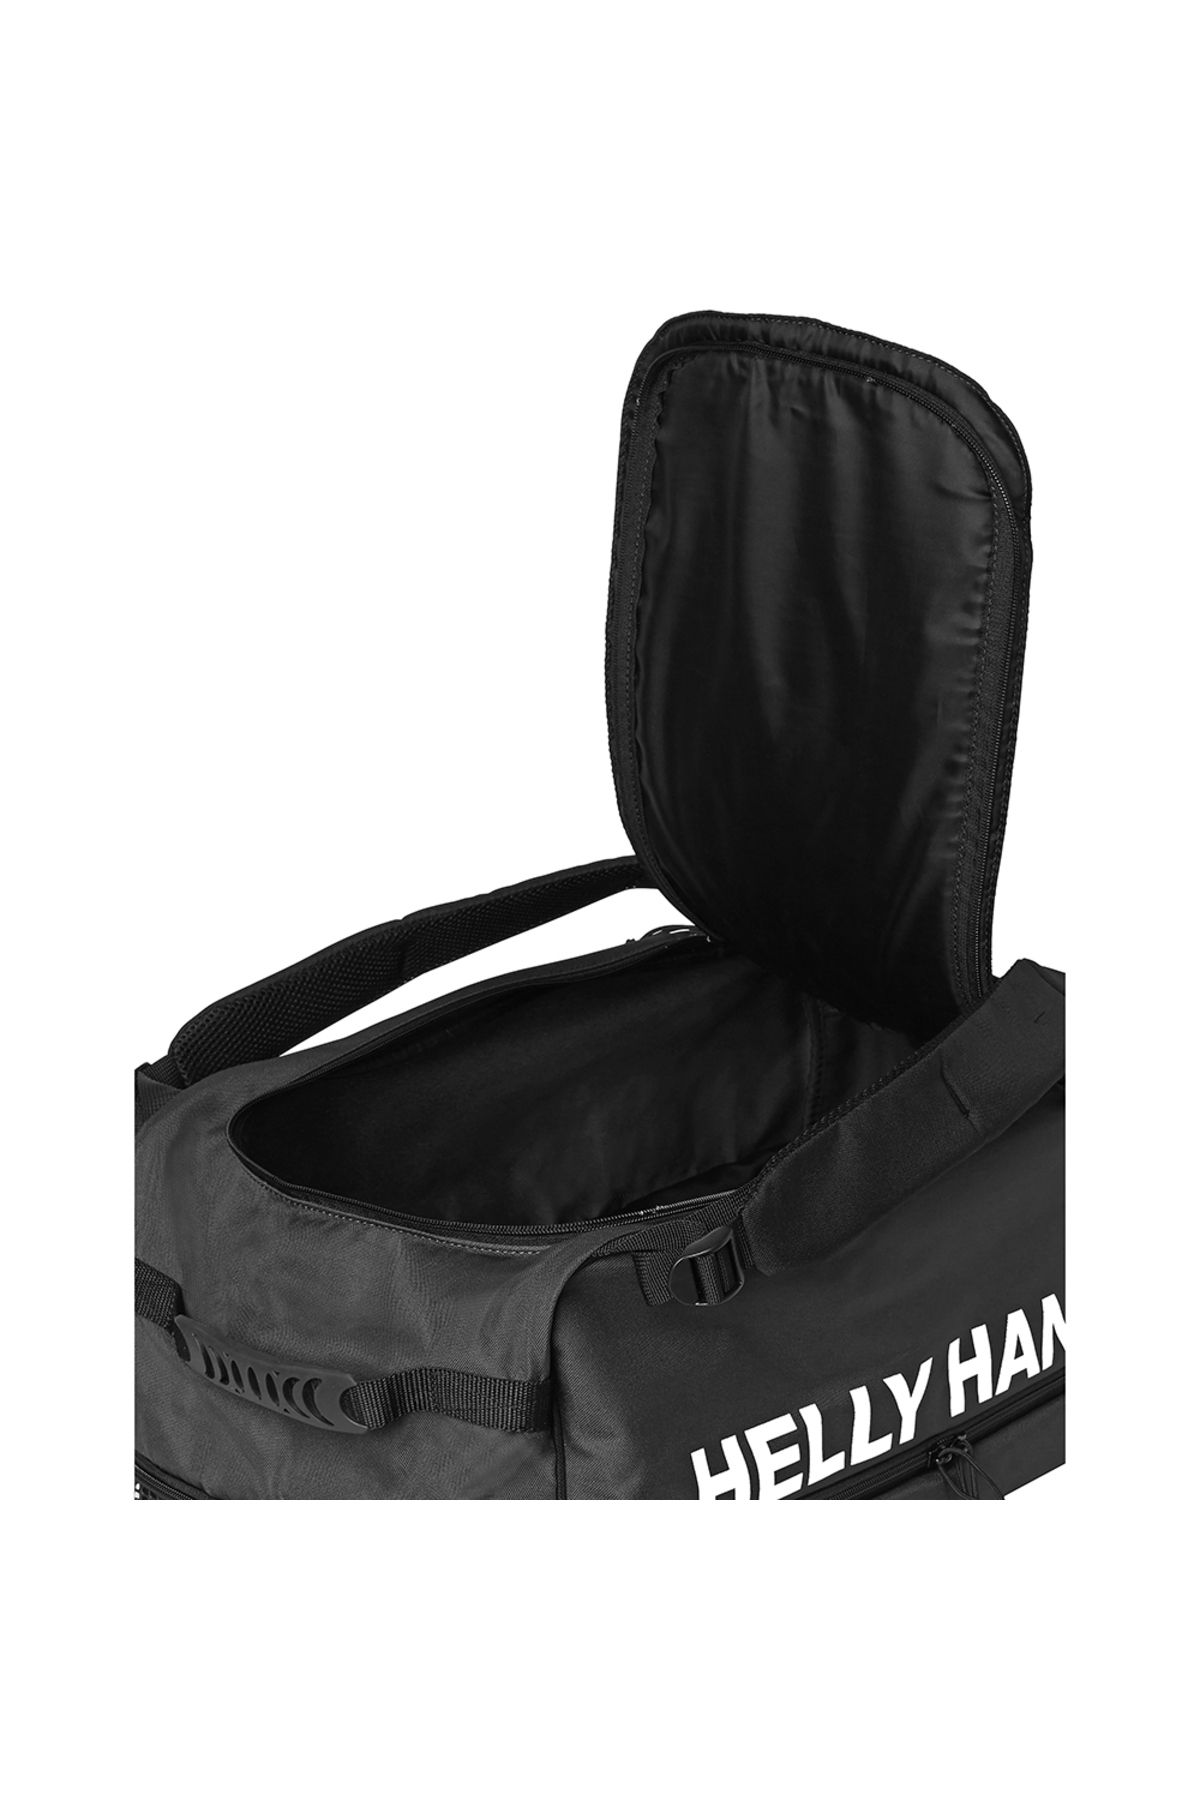 Helly Hansen Racıng Bag